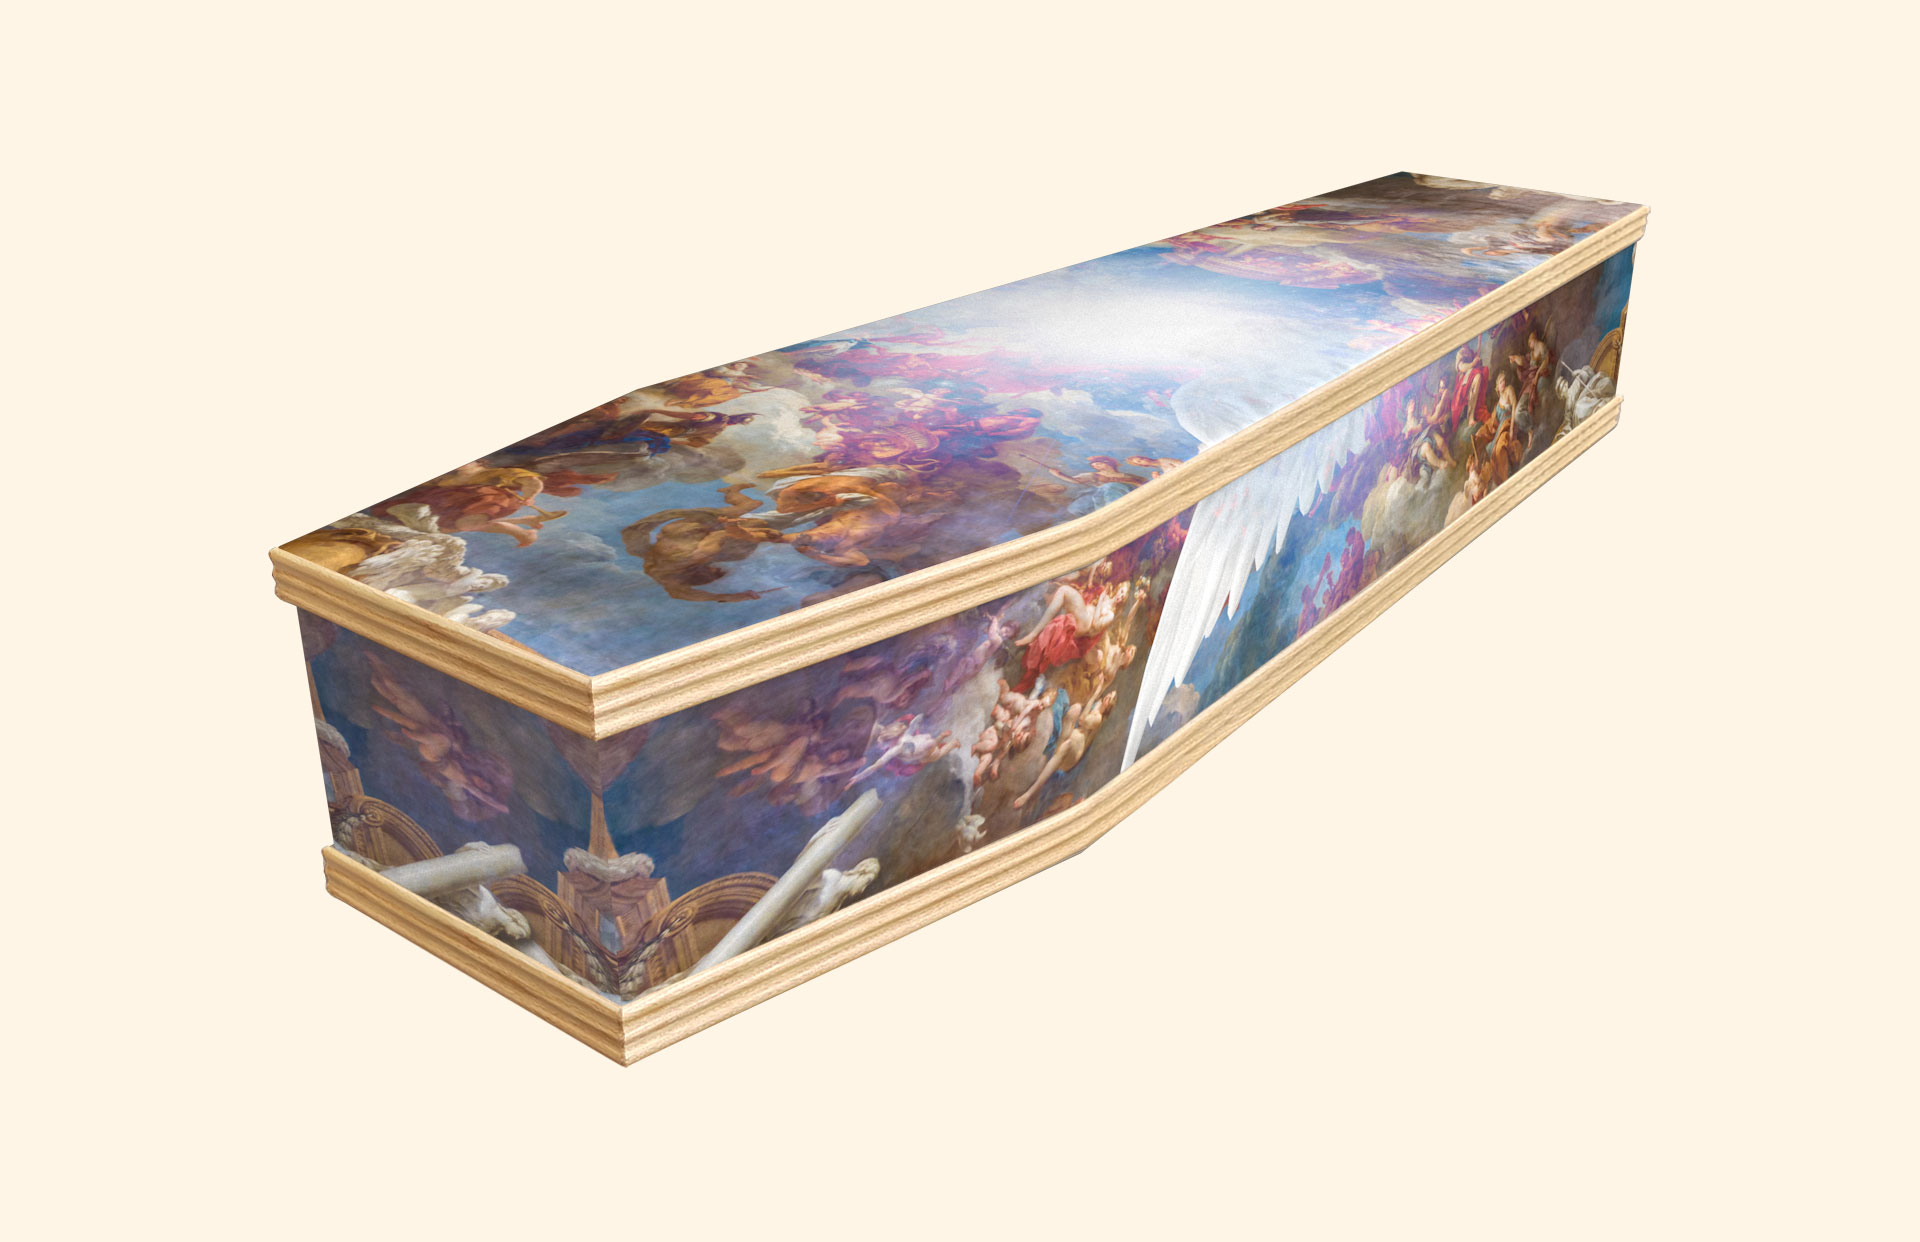 Vatican Wings design in a classic coffin